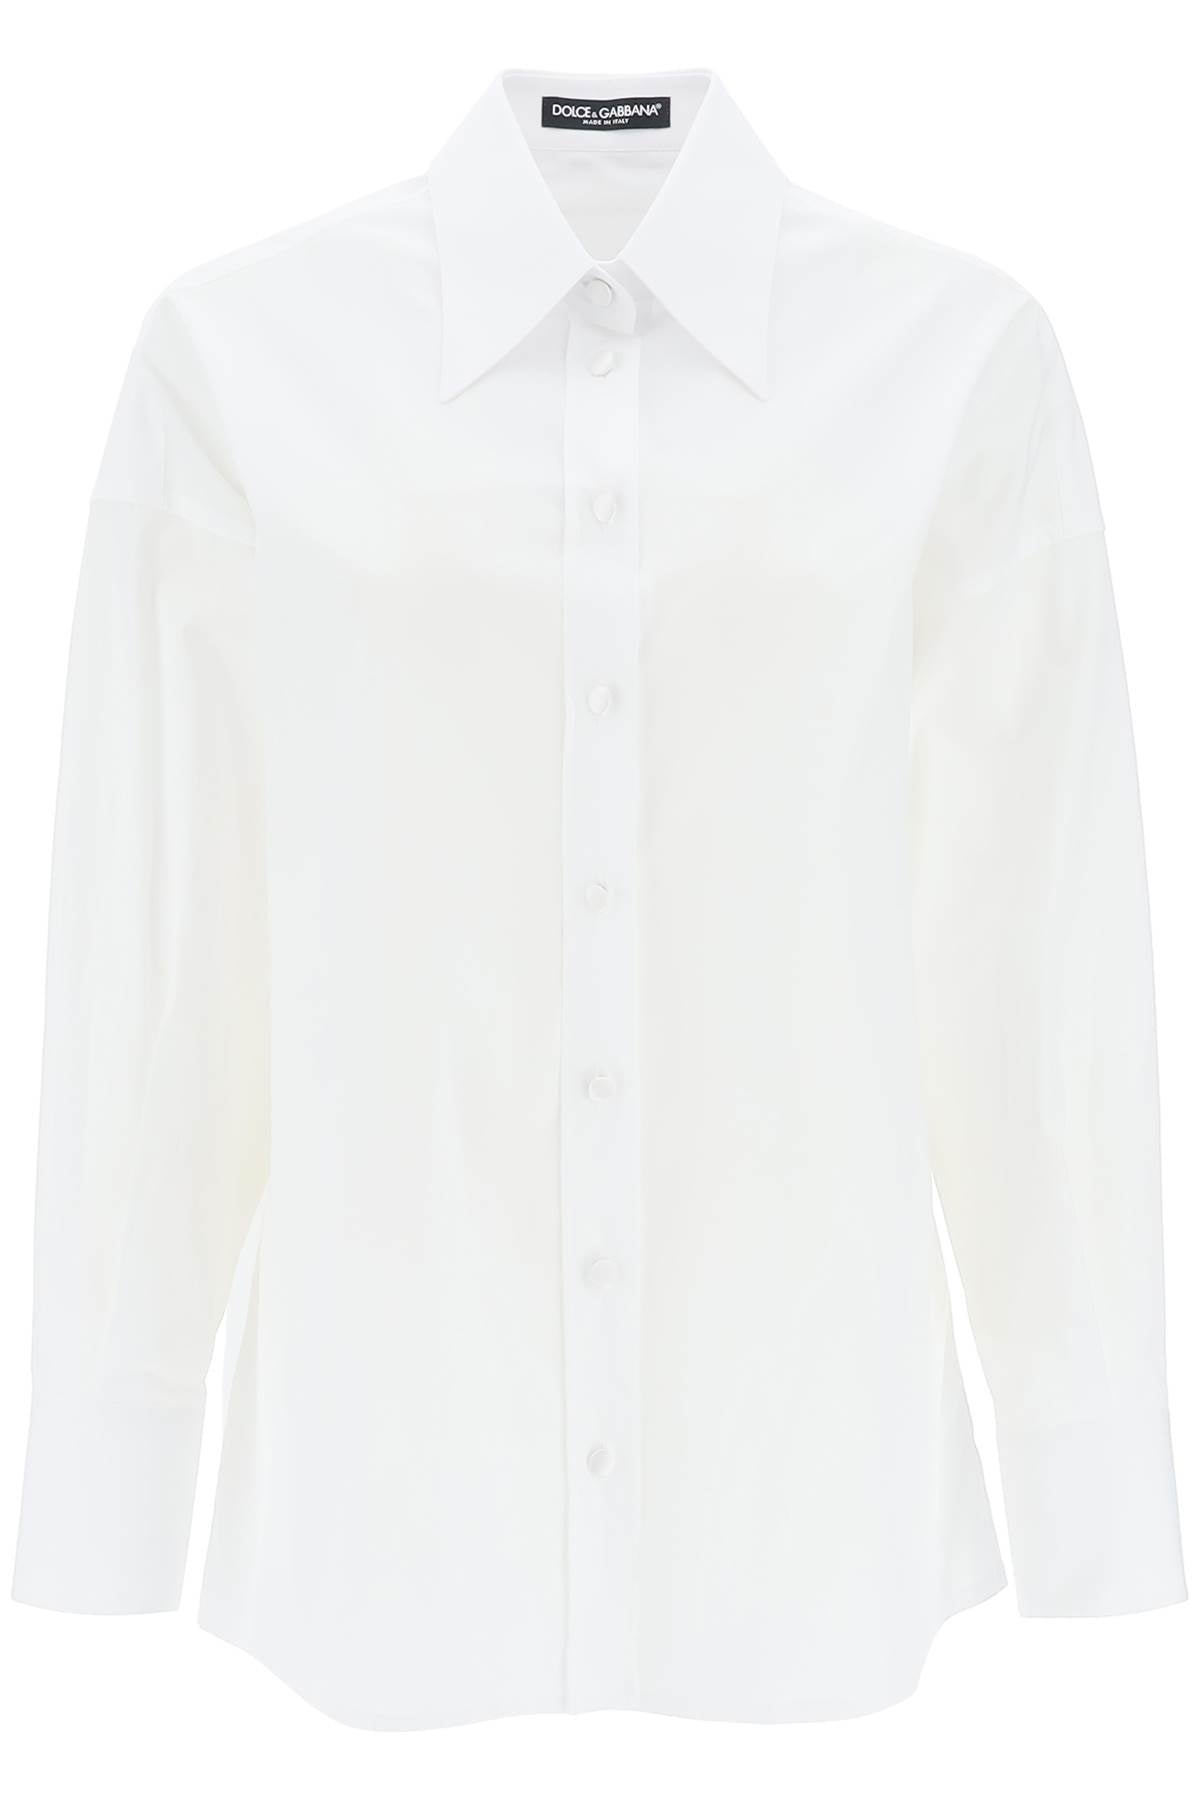 Dolce & gabbana maxi shirt with satin buttons-0